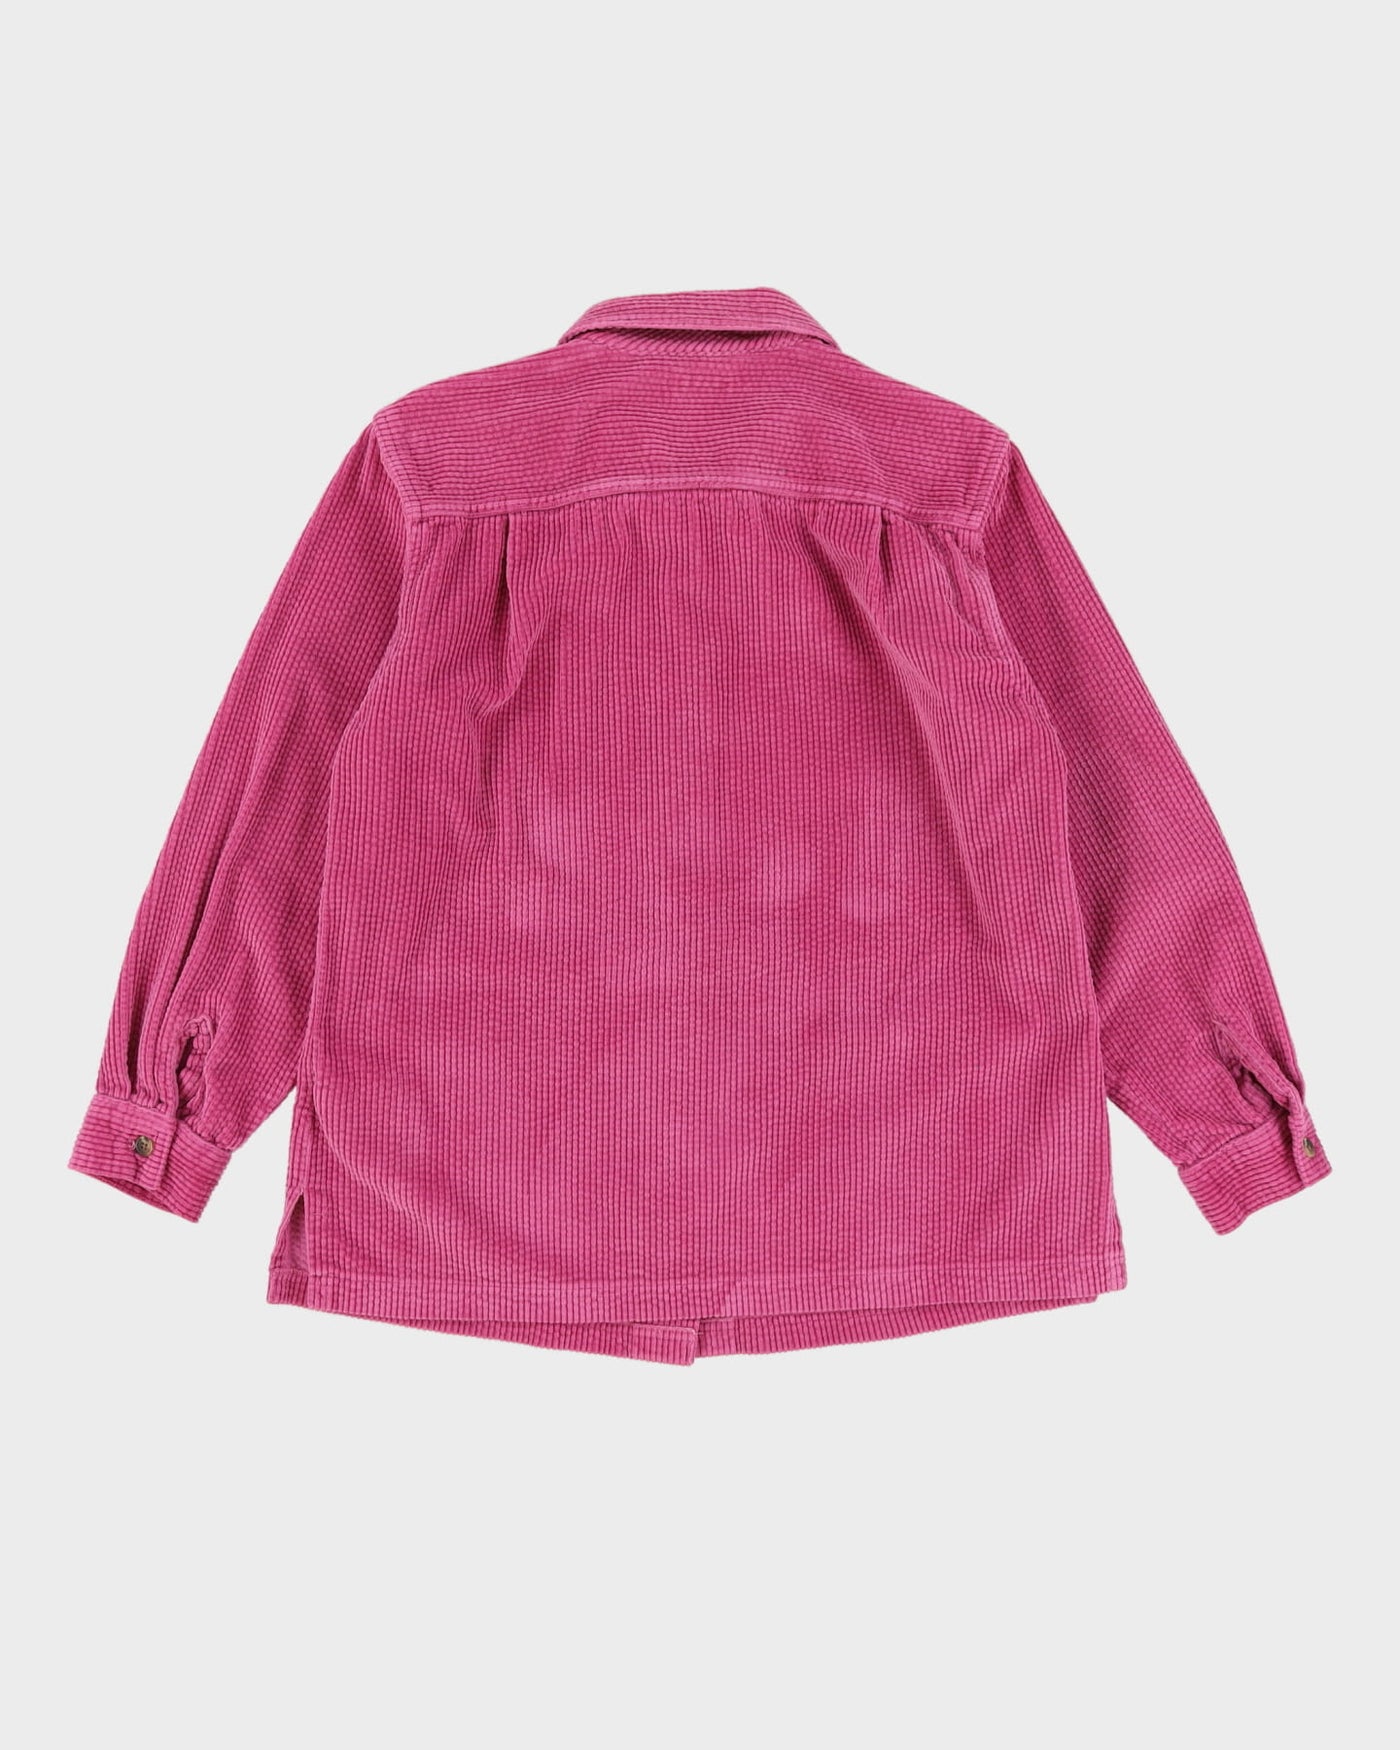 L.L. Bean Pink Cord Shirt - S